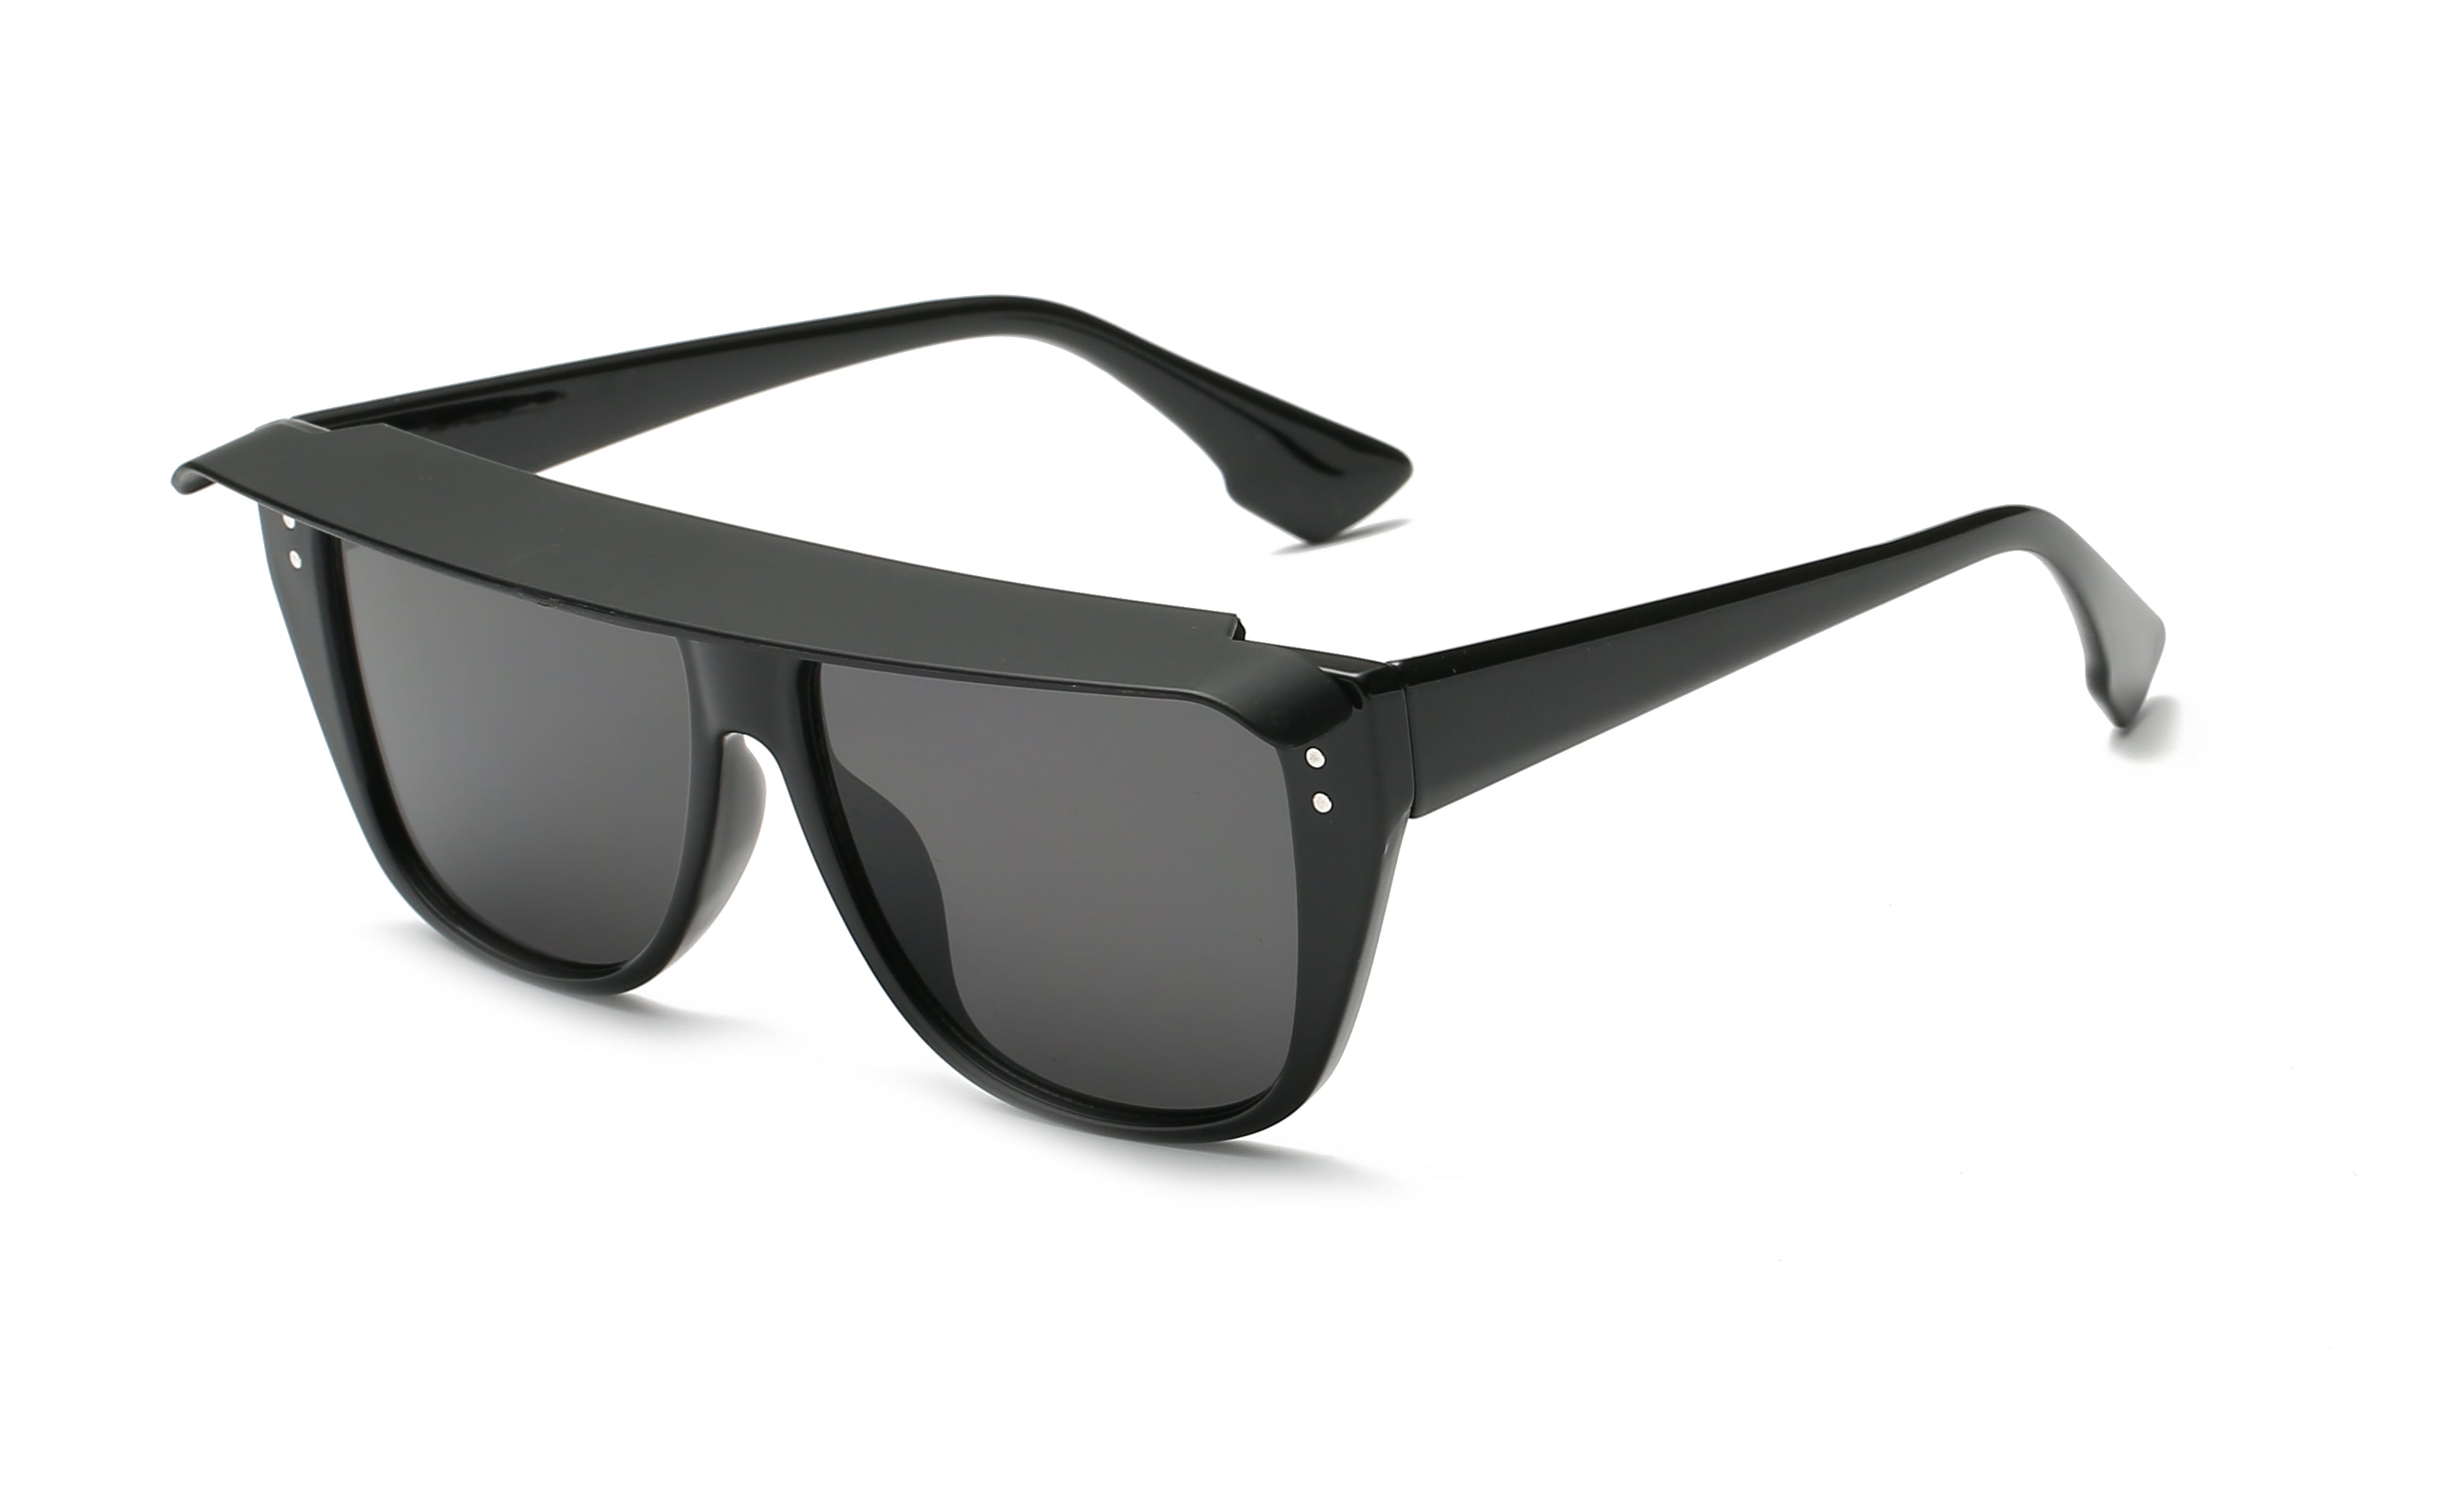 S1097 - Retro Vintage Shield Square Fashion Sunglasses Black